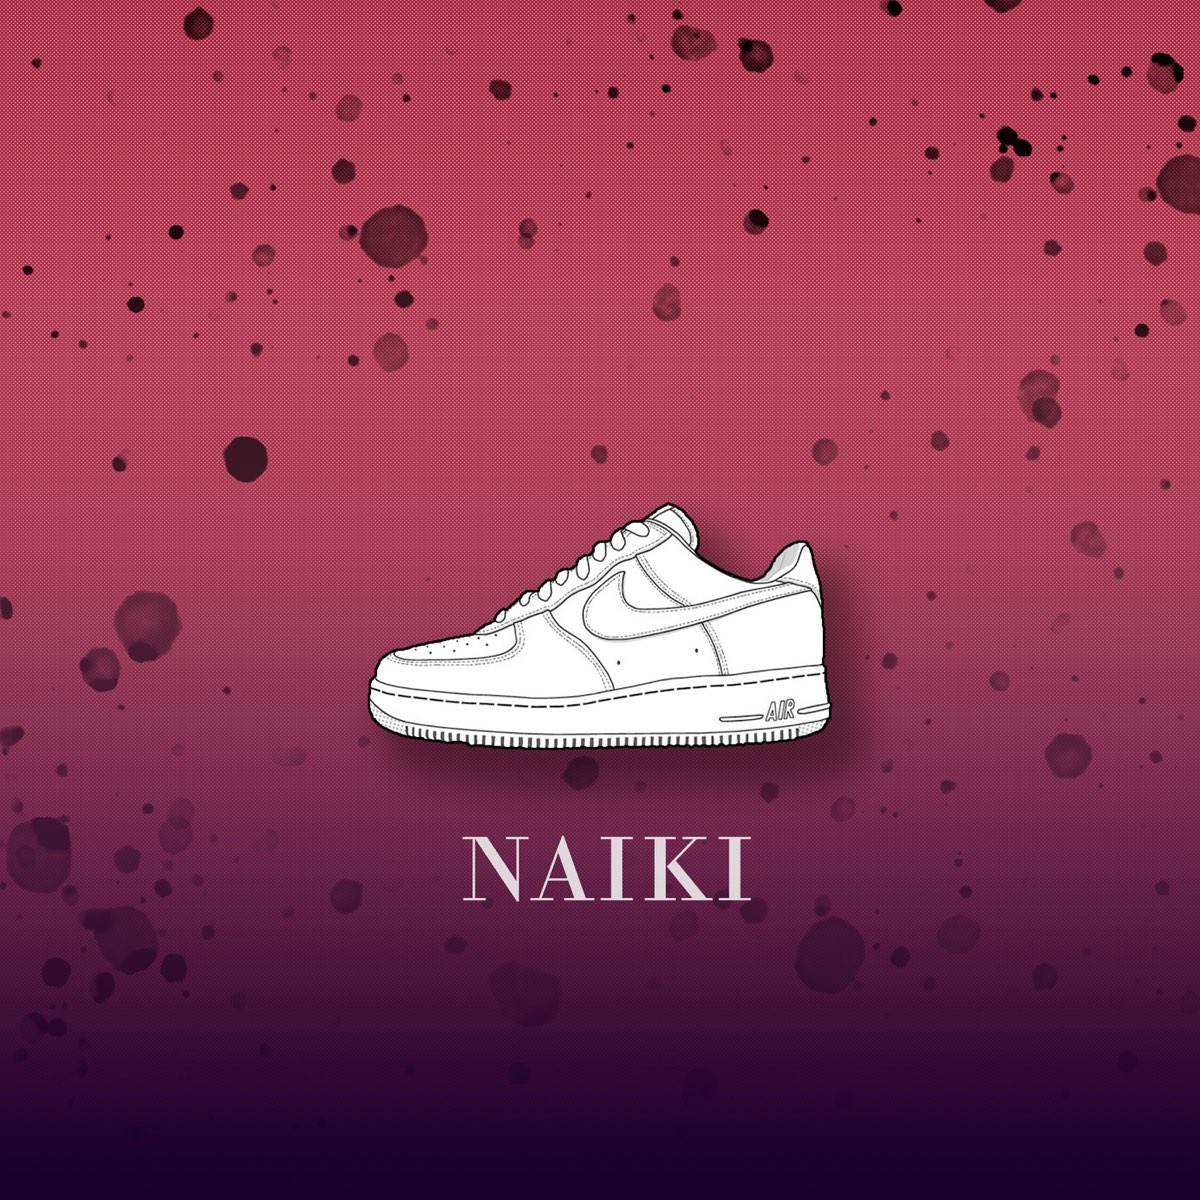 Naiki - Single - Album by Nax King - Apple Music